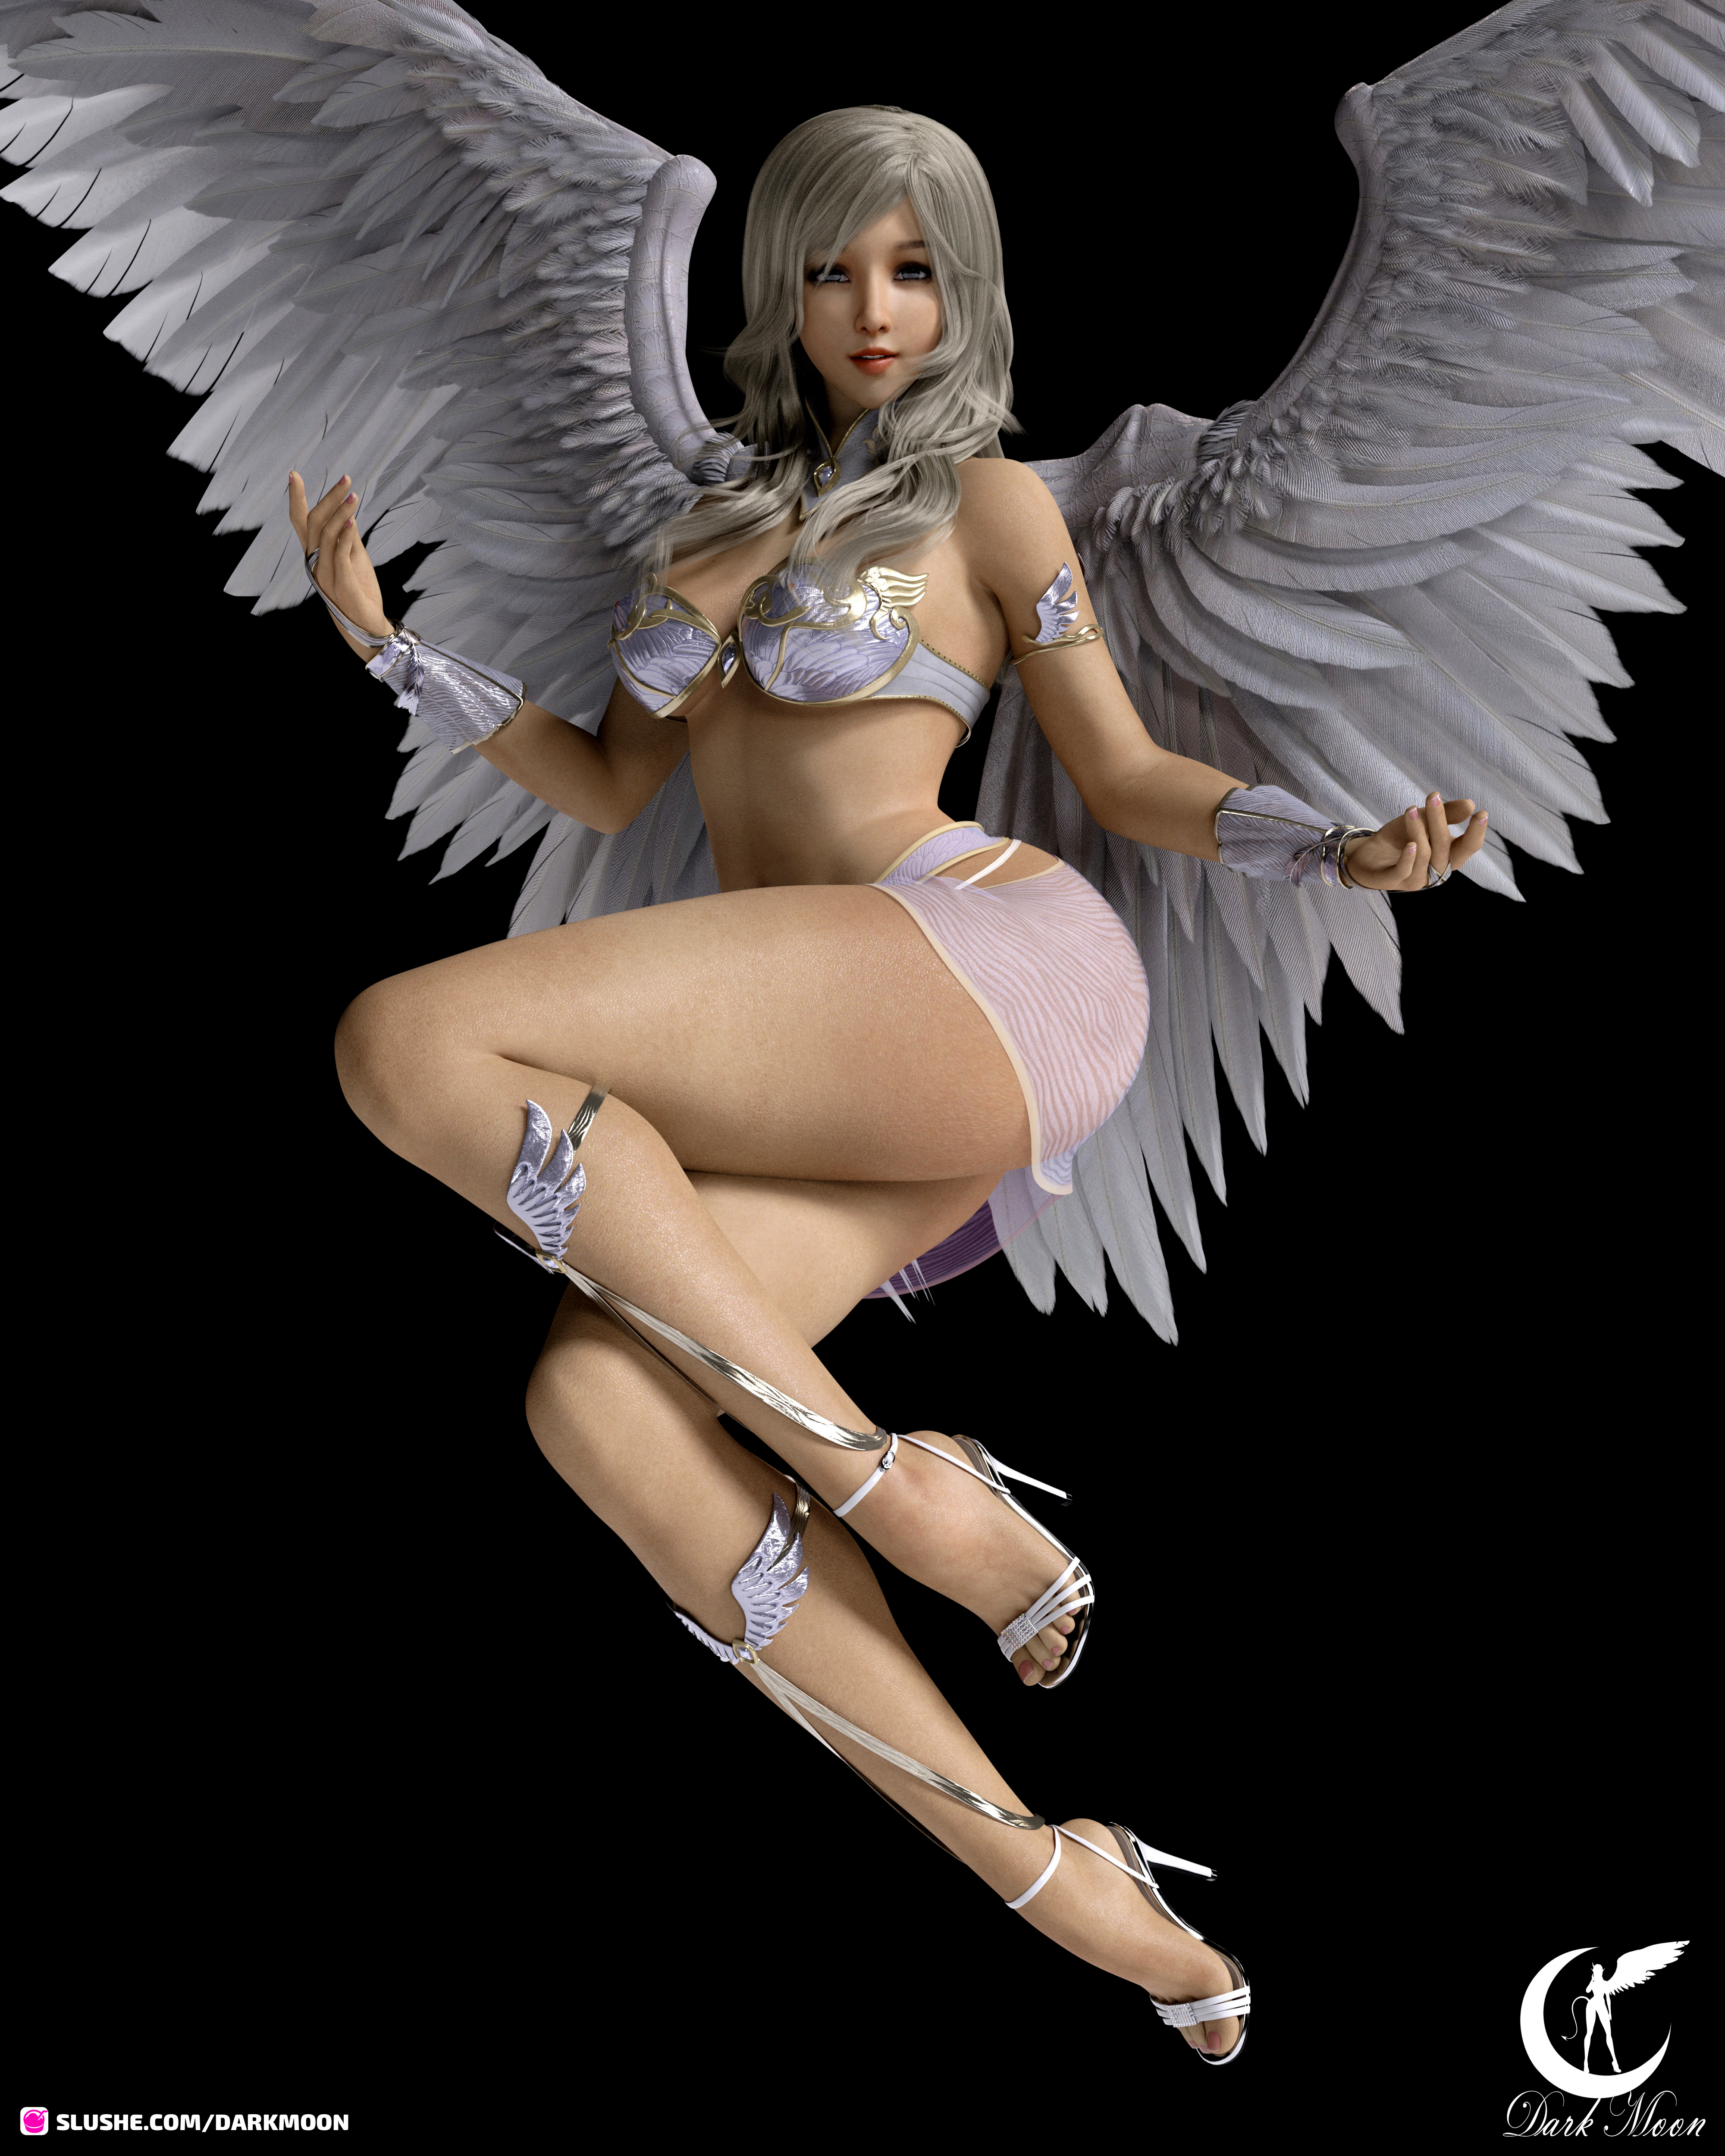 General 4000x5000 Darkmoon CGI women angel silver hair looking at viewer legs wings feathers simple background black background